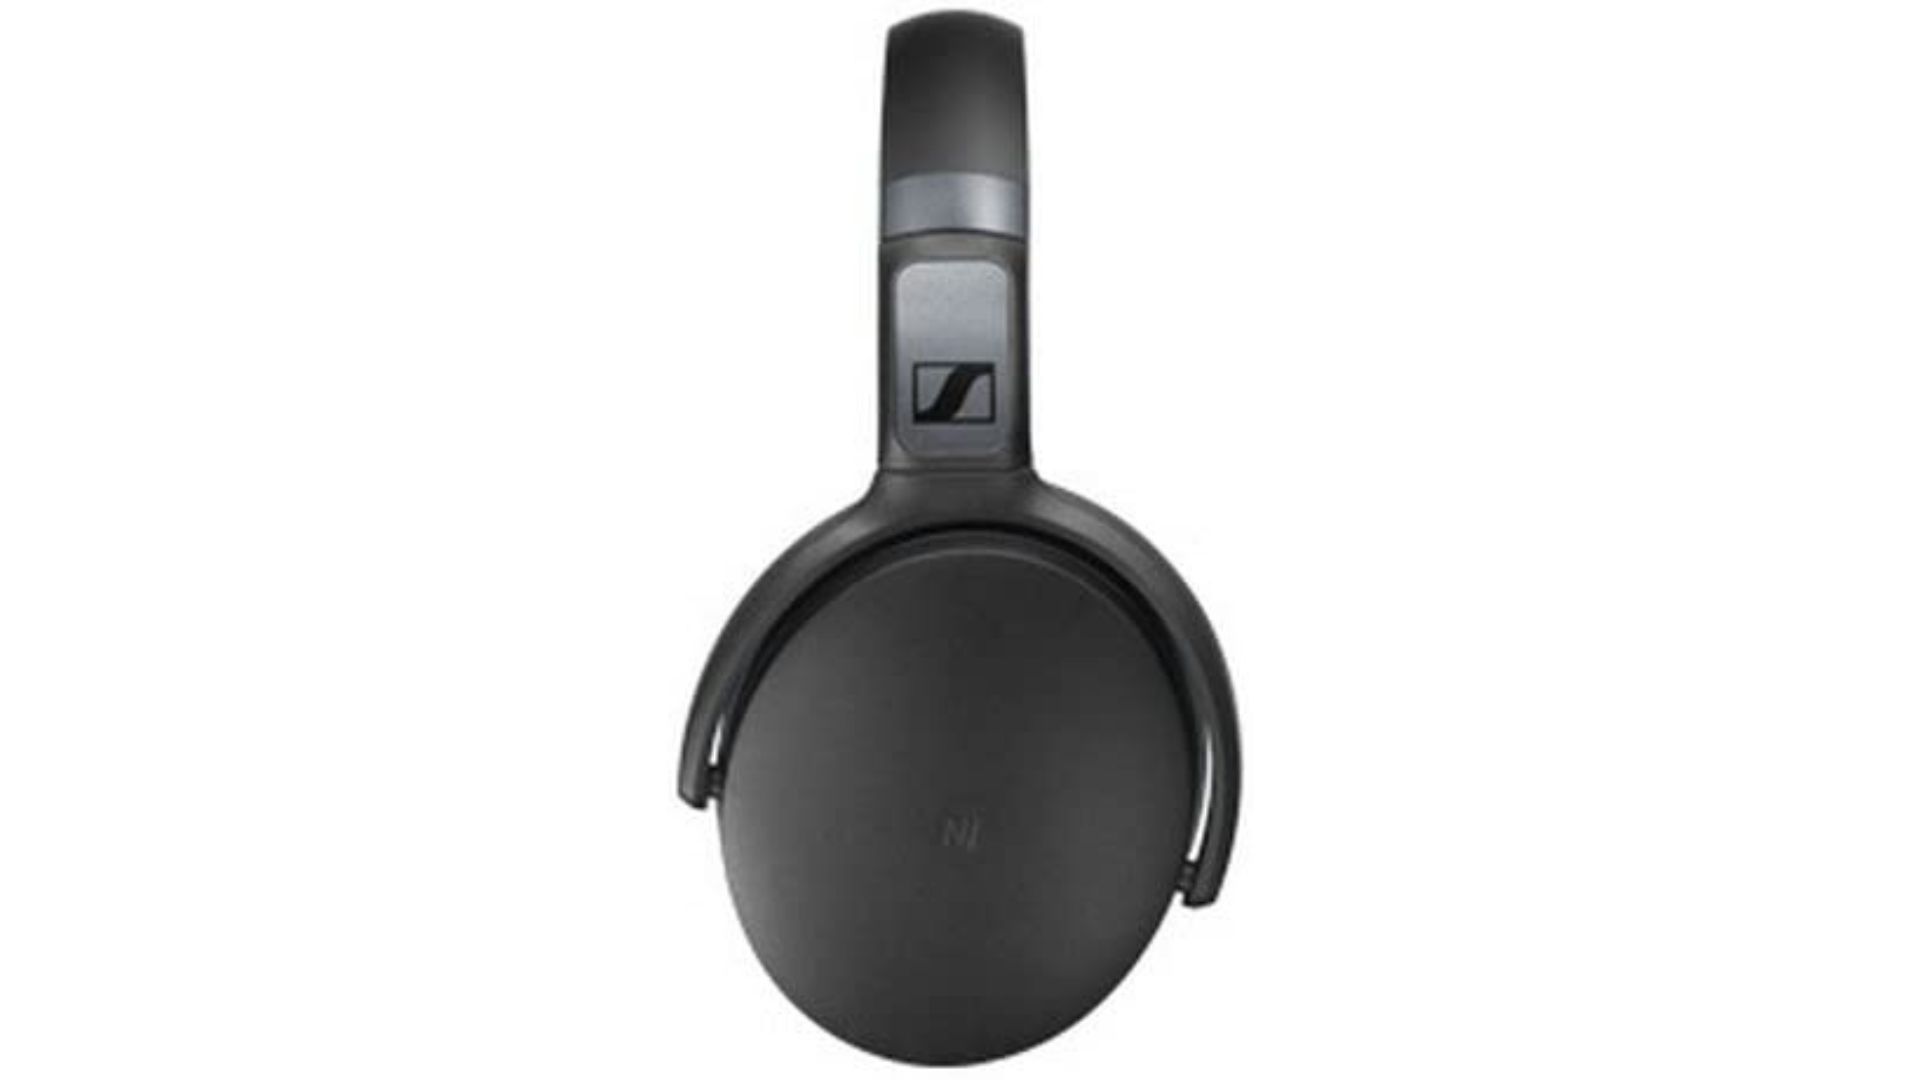 sennheiser headphones 4.40 bt review